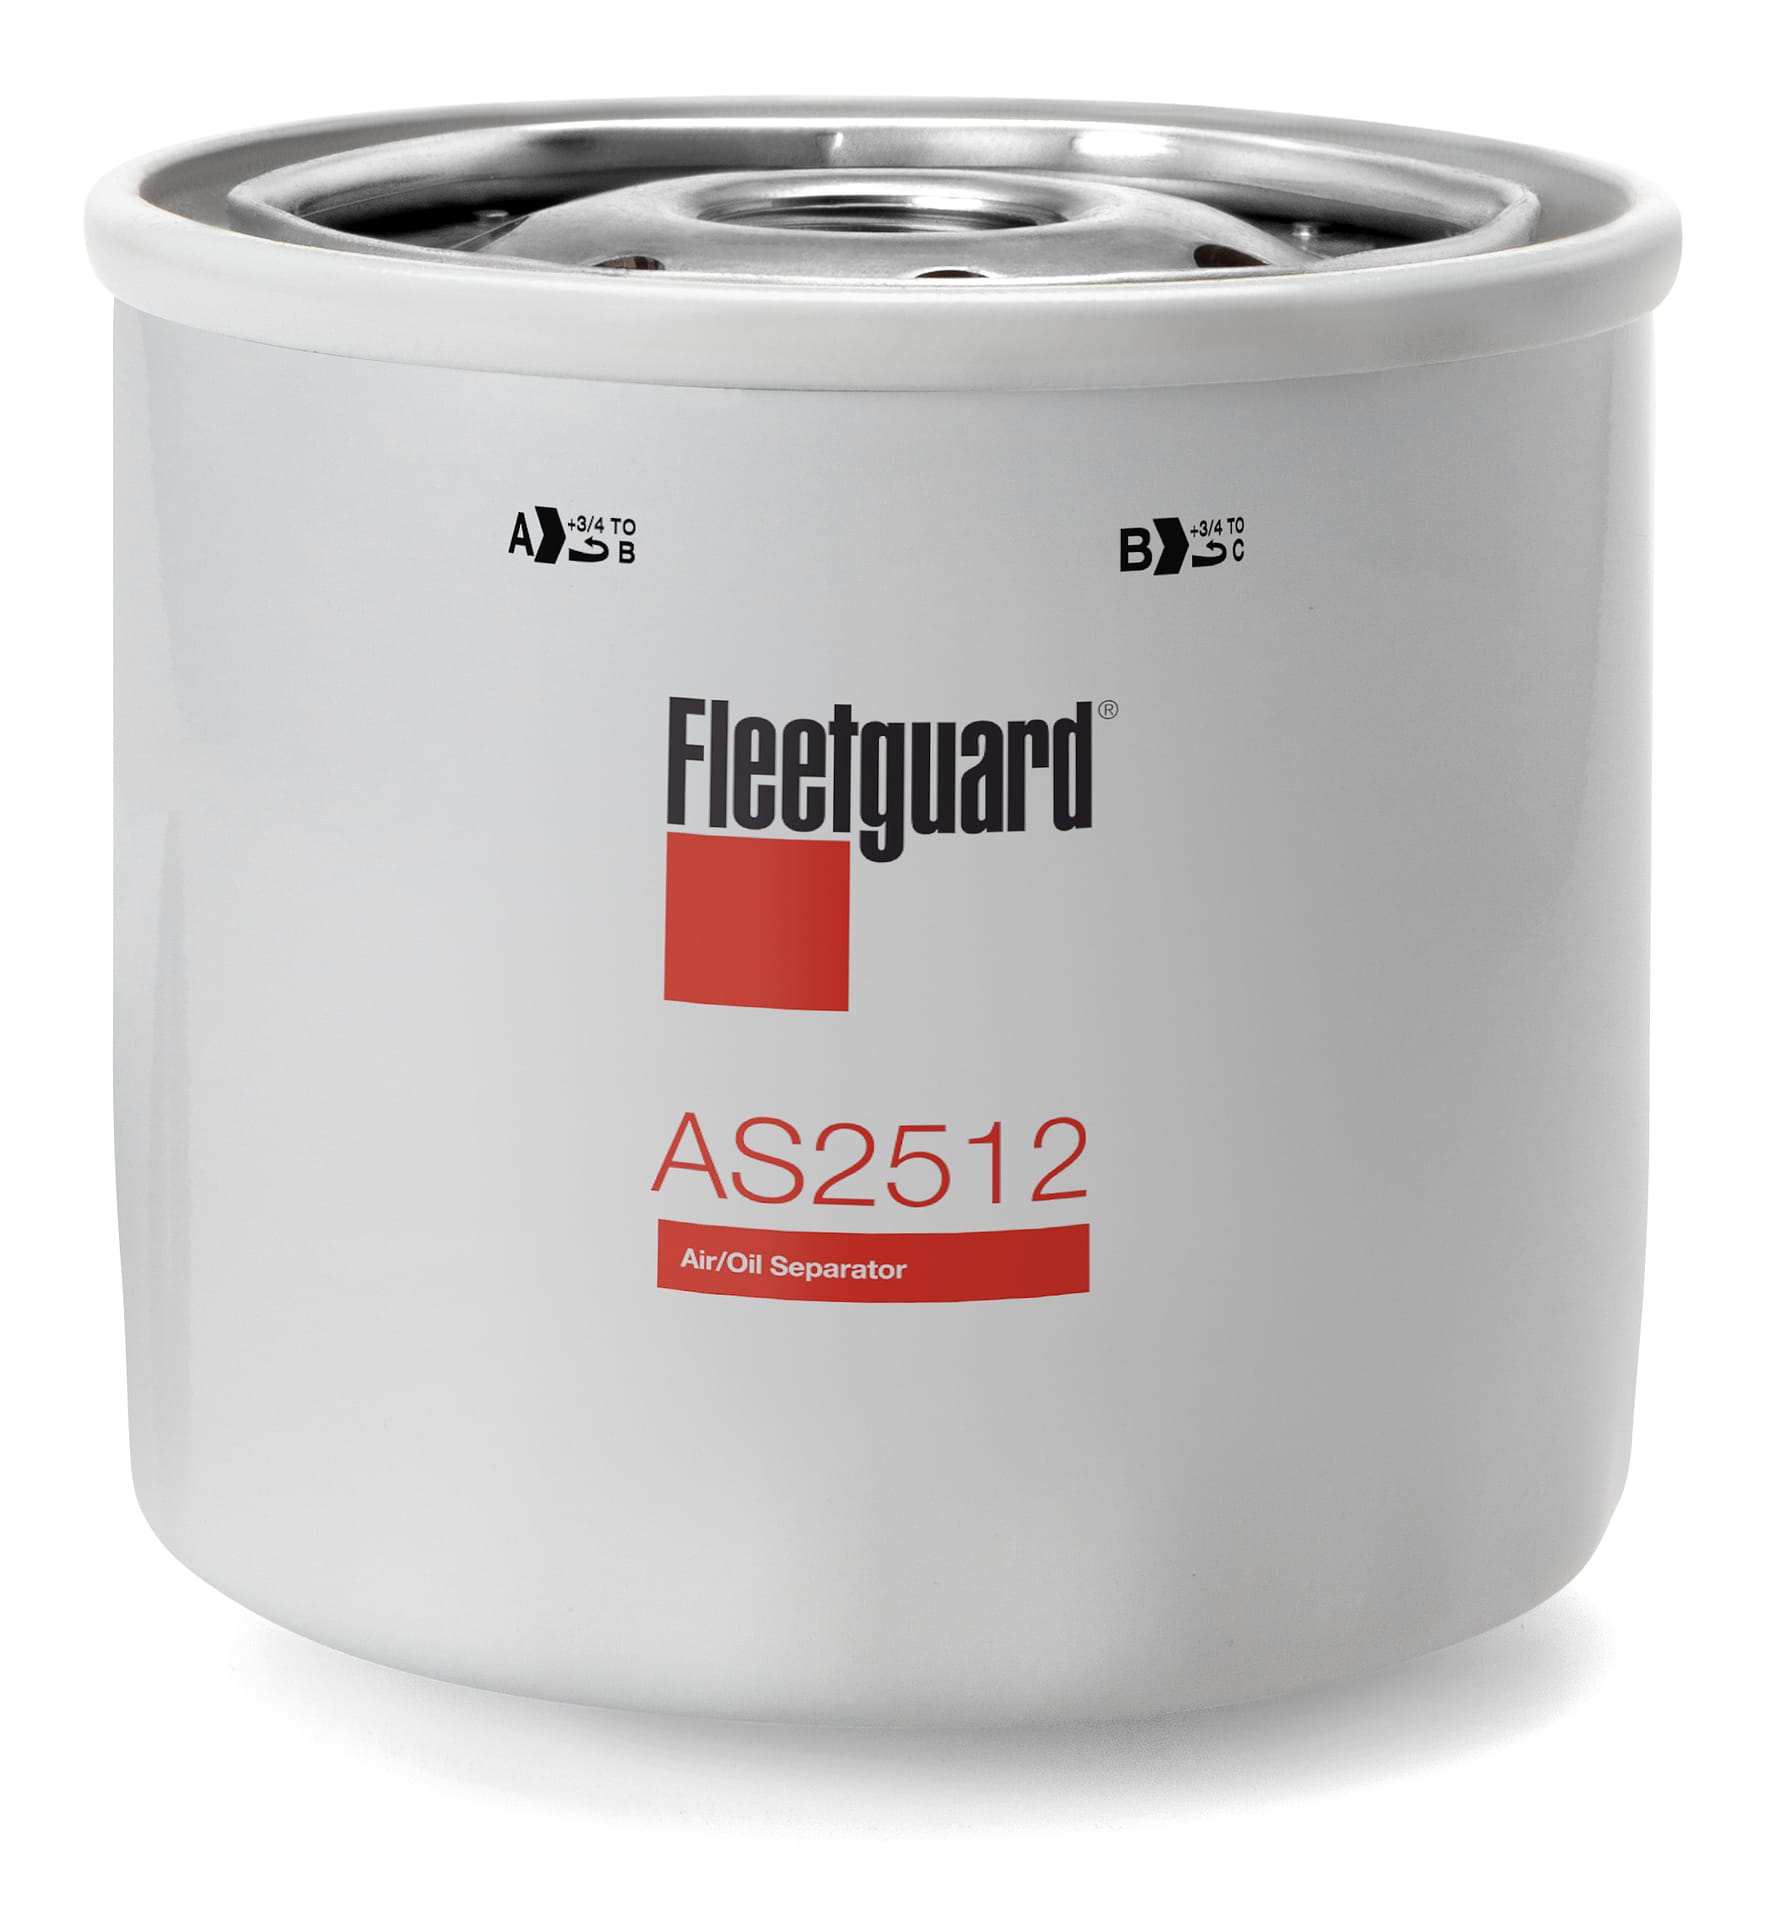 Fleetguard Air Filter Part No AF849 